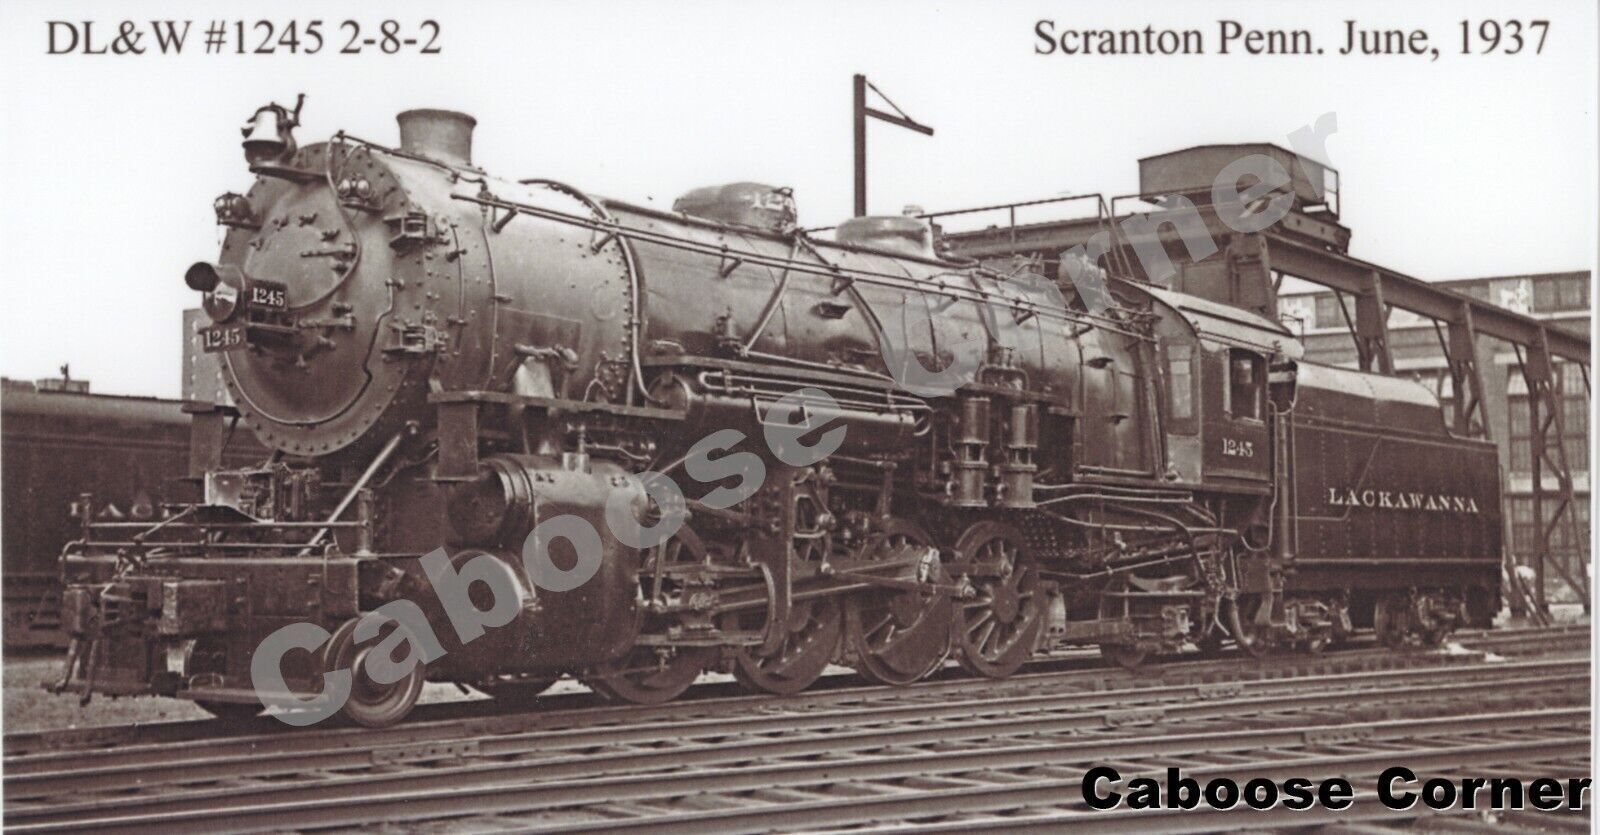 DL&W Railroad #1245 2-8-2 Scranton Penn June 1937 B&W Photo (L0292)